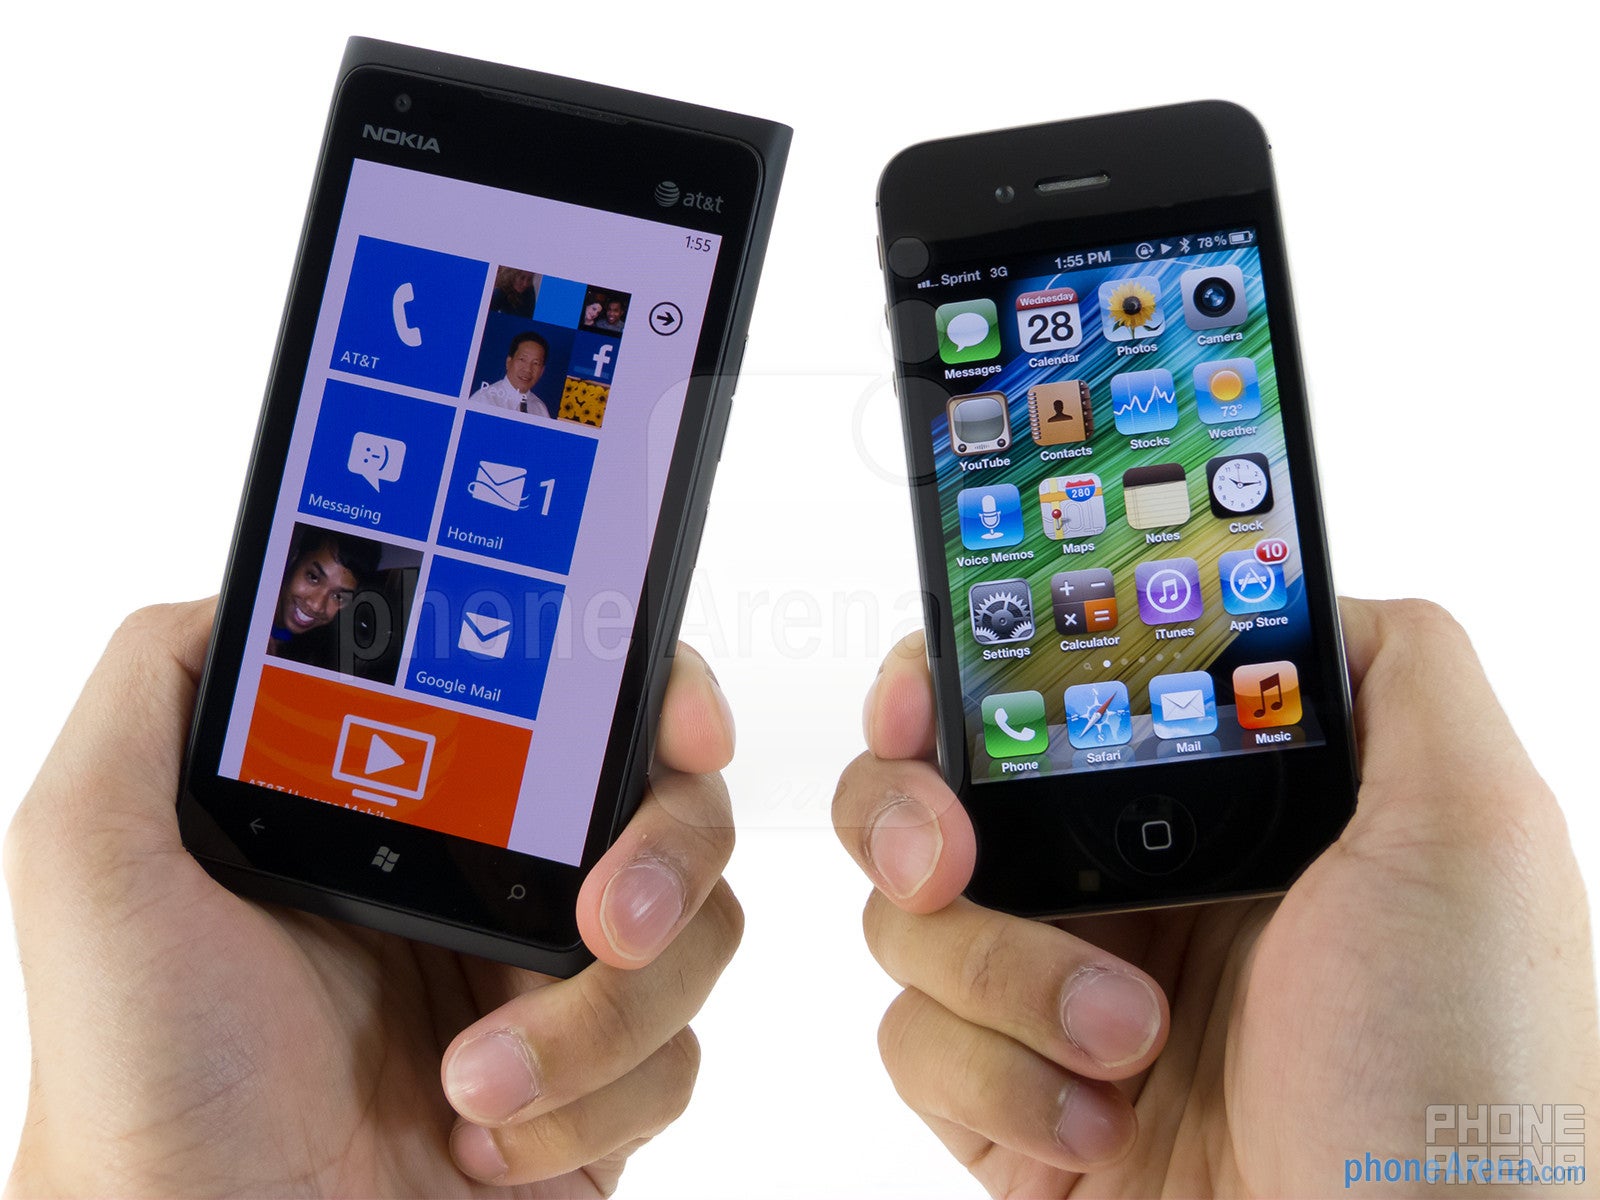 Nokia Lumia 900 vs Apple iPhone 4S